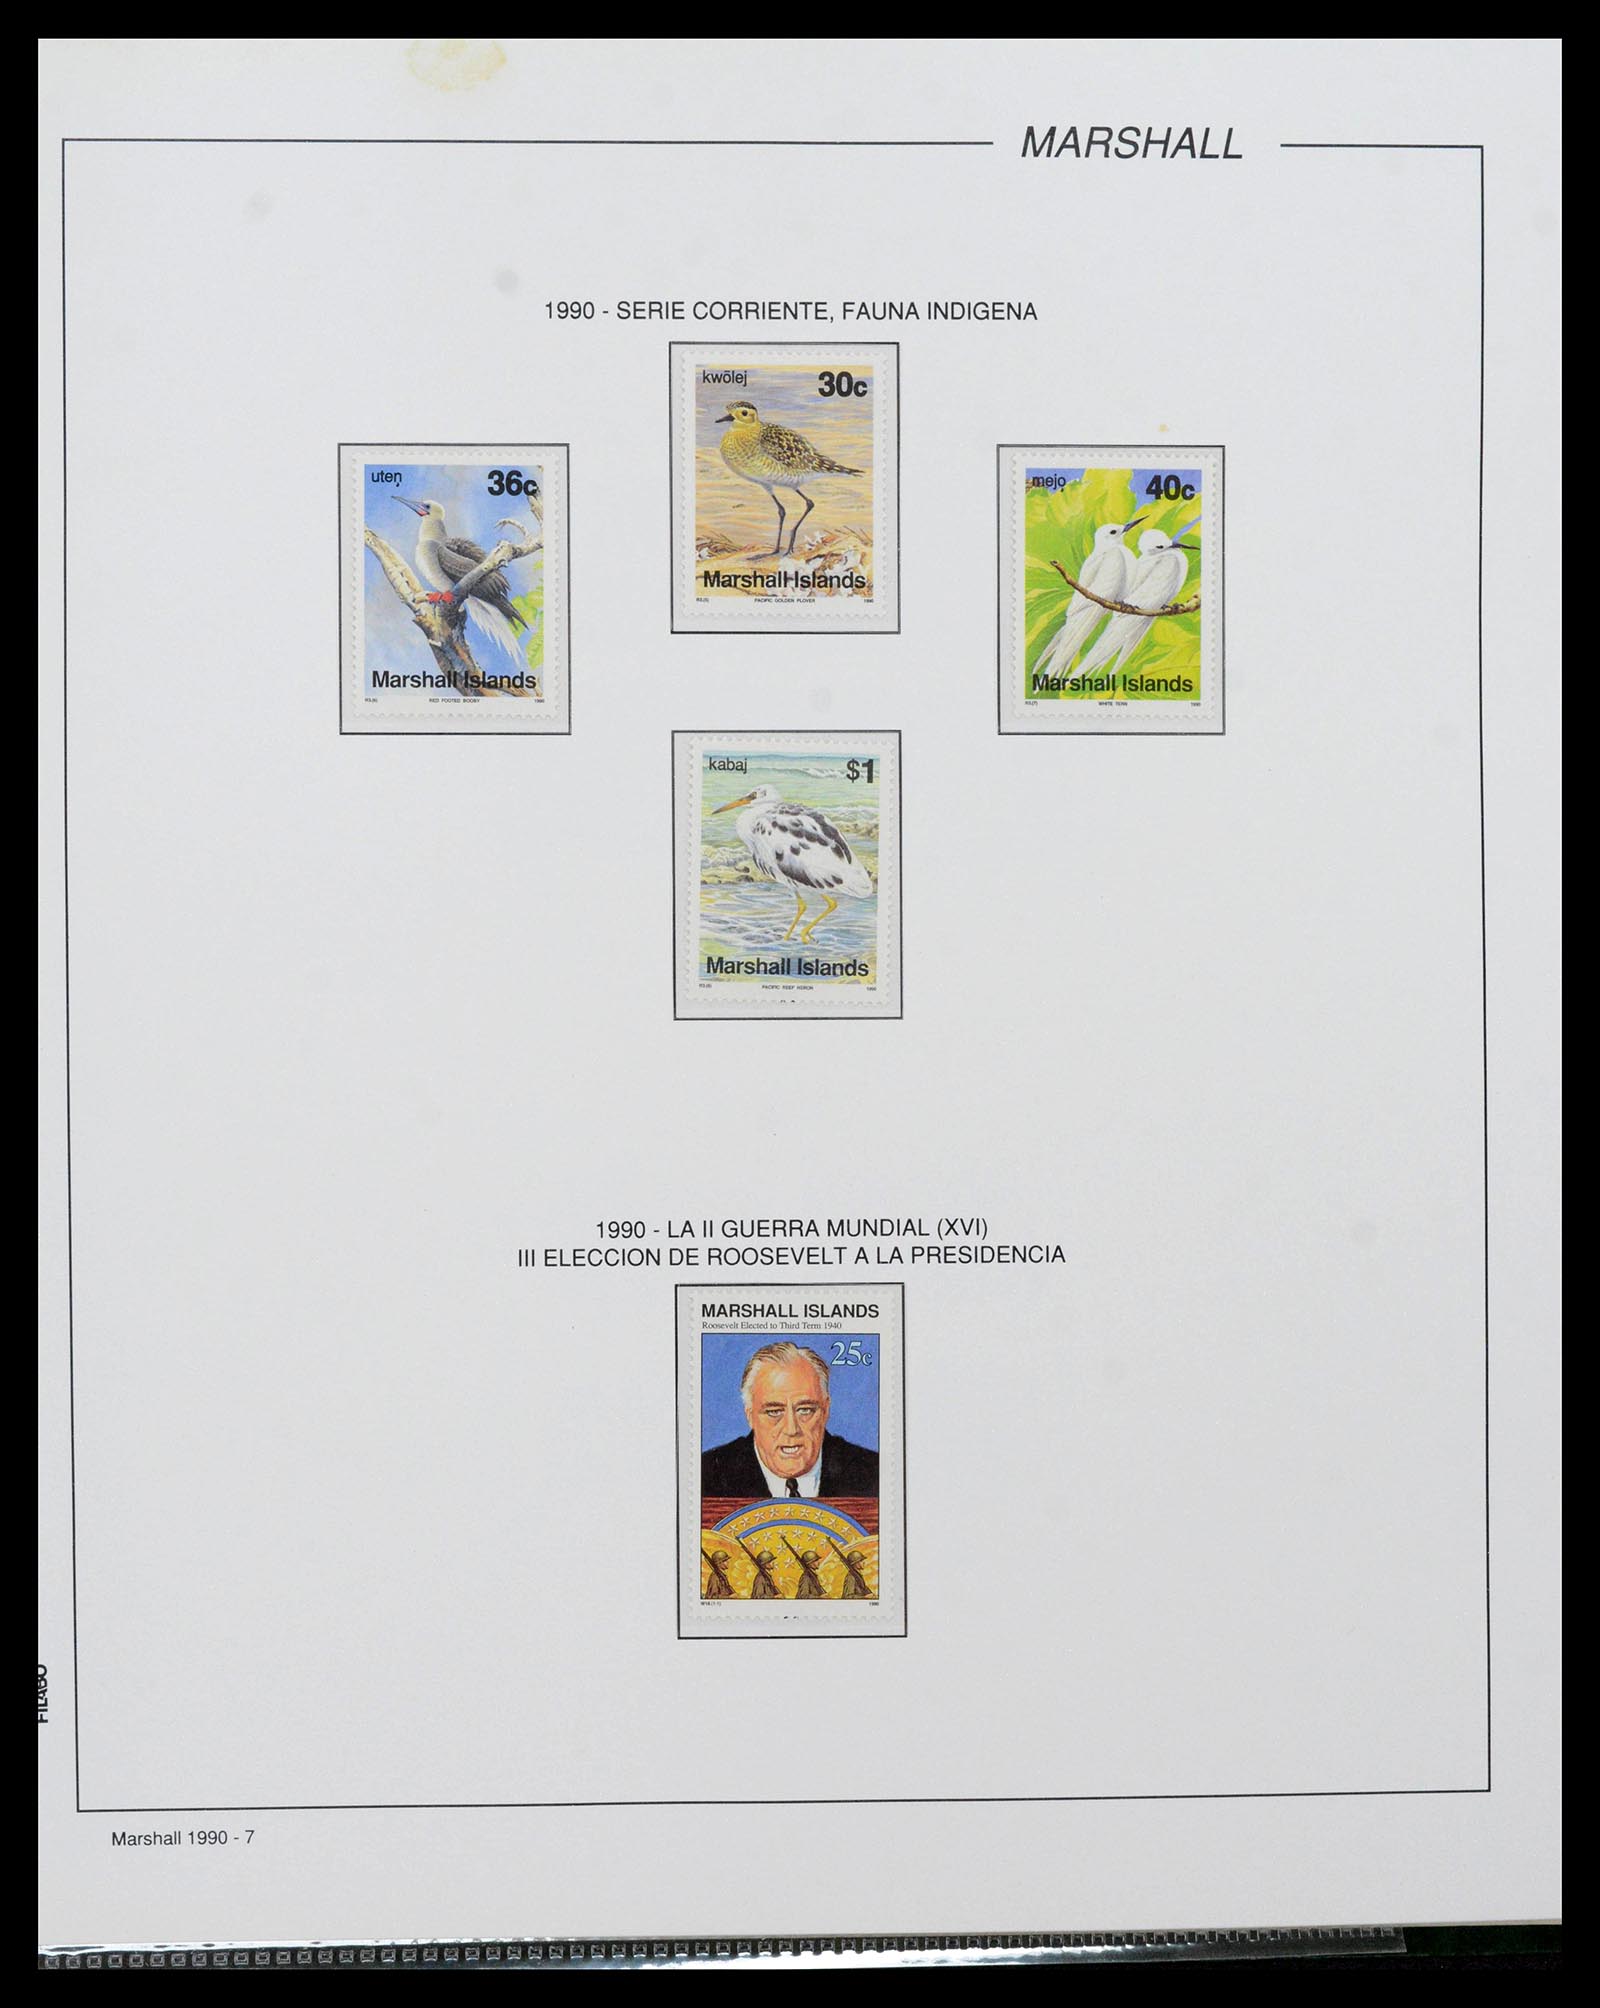 39222 0149 - Stamp collection 39222 Palau, Micronesia and Marshall islands 1980-1995.